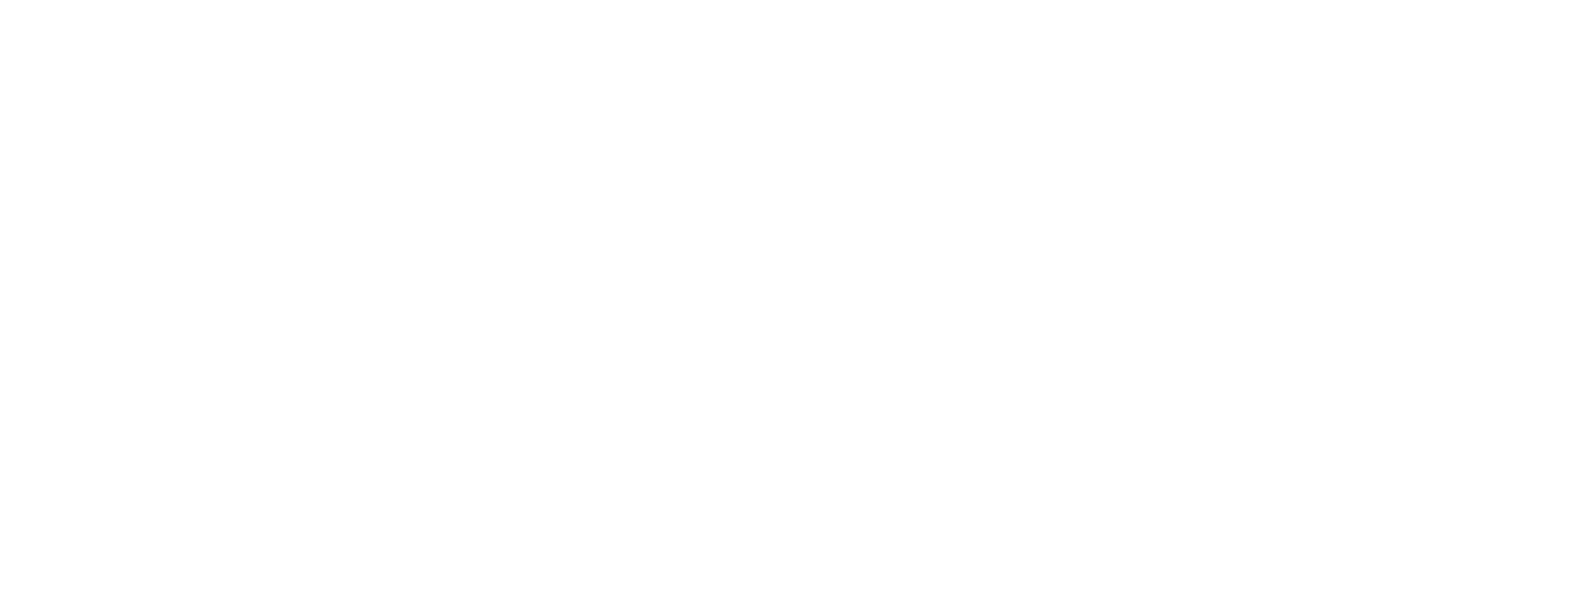 Convoca Deepdata